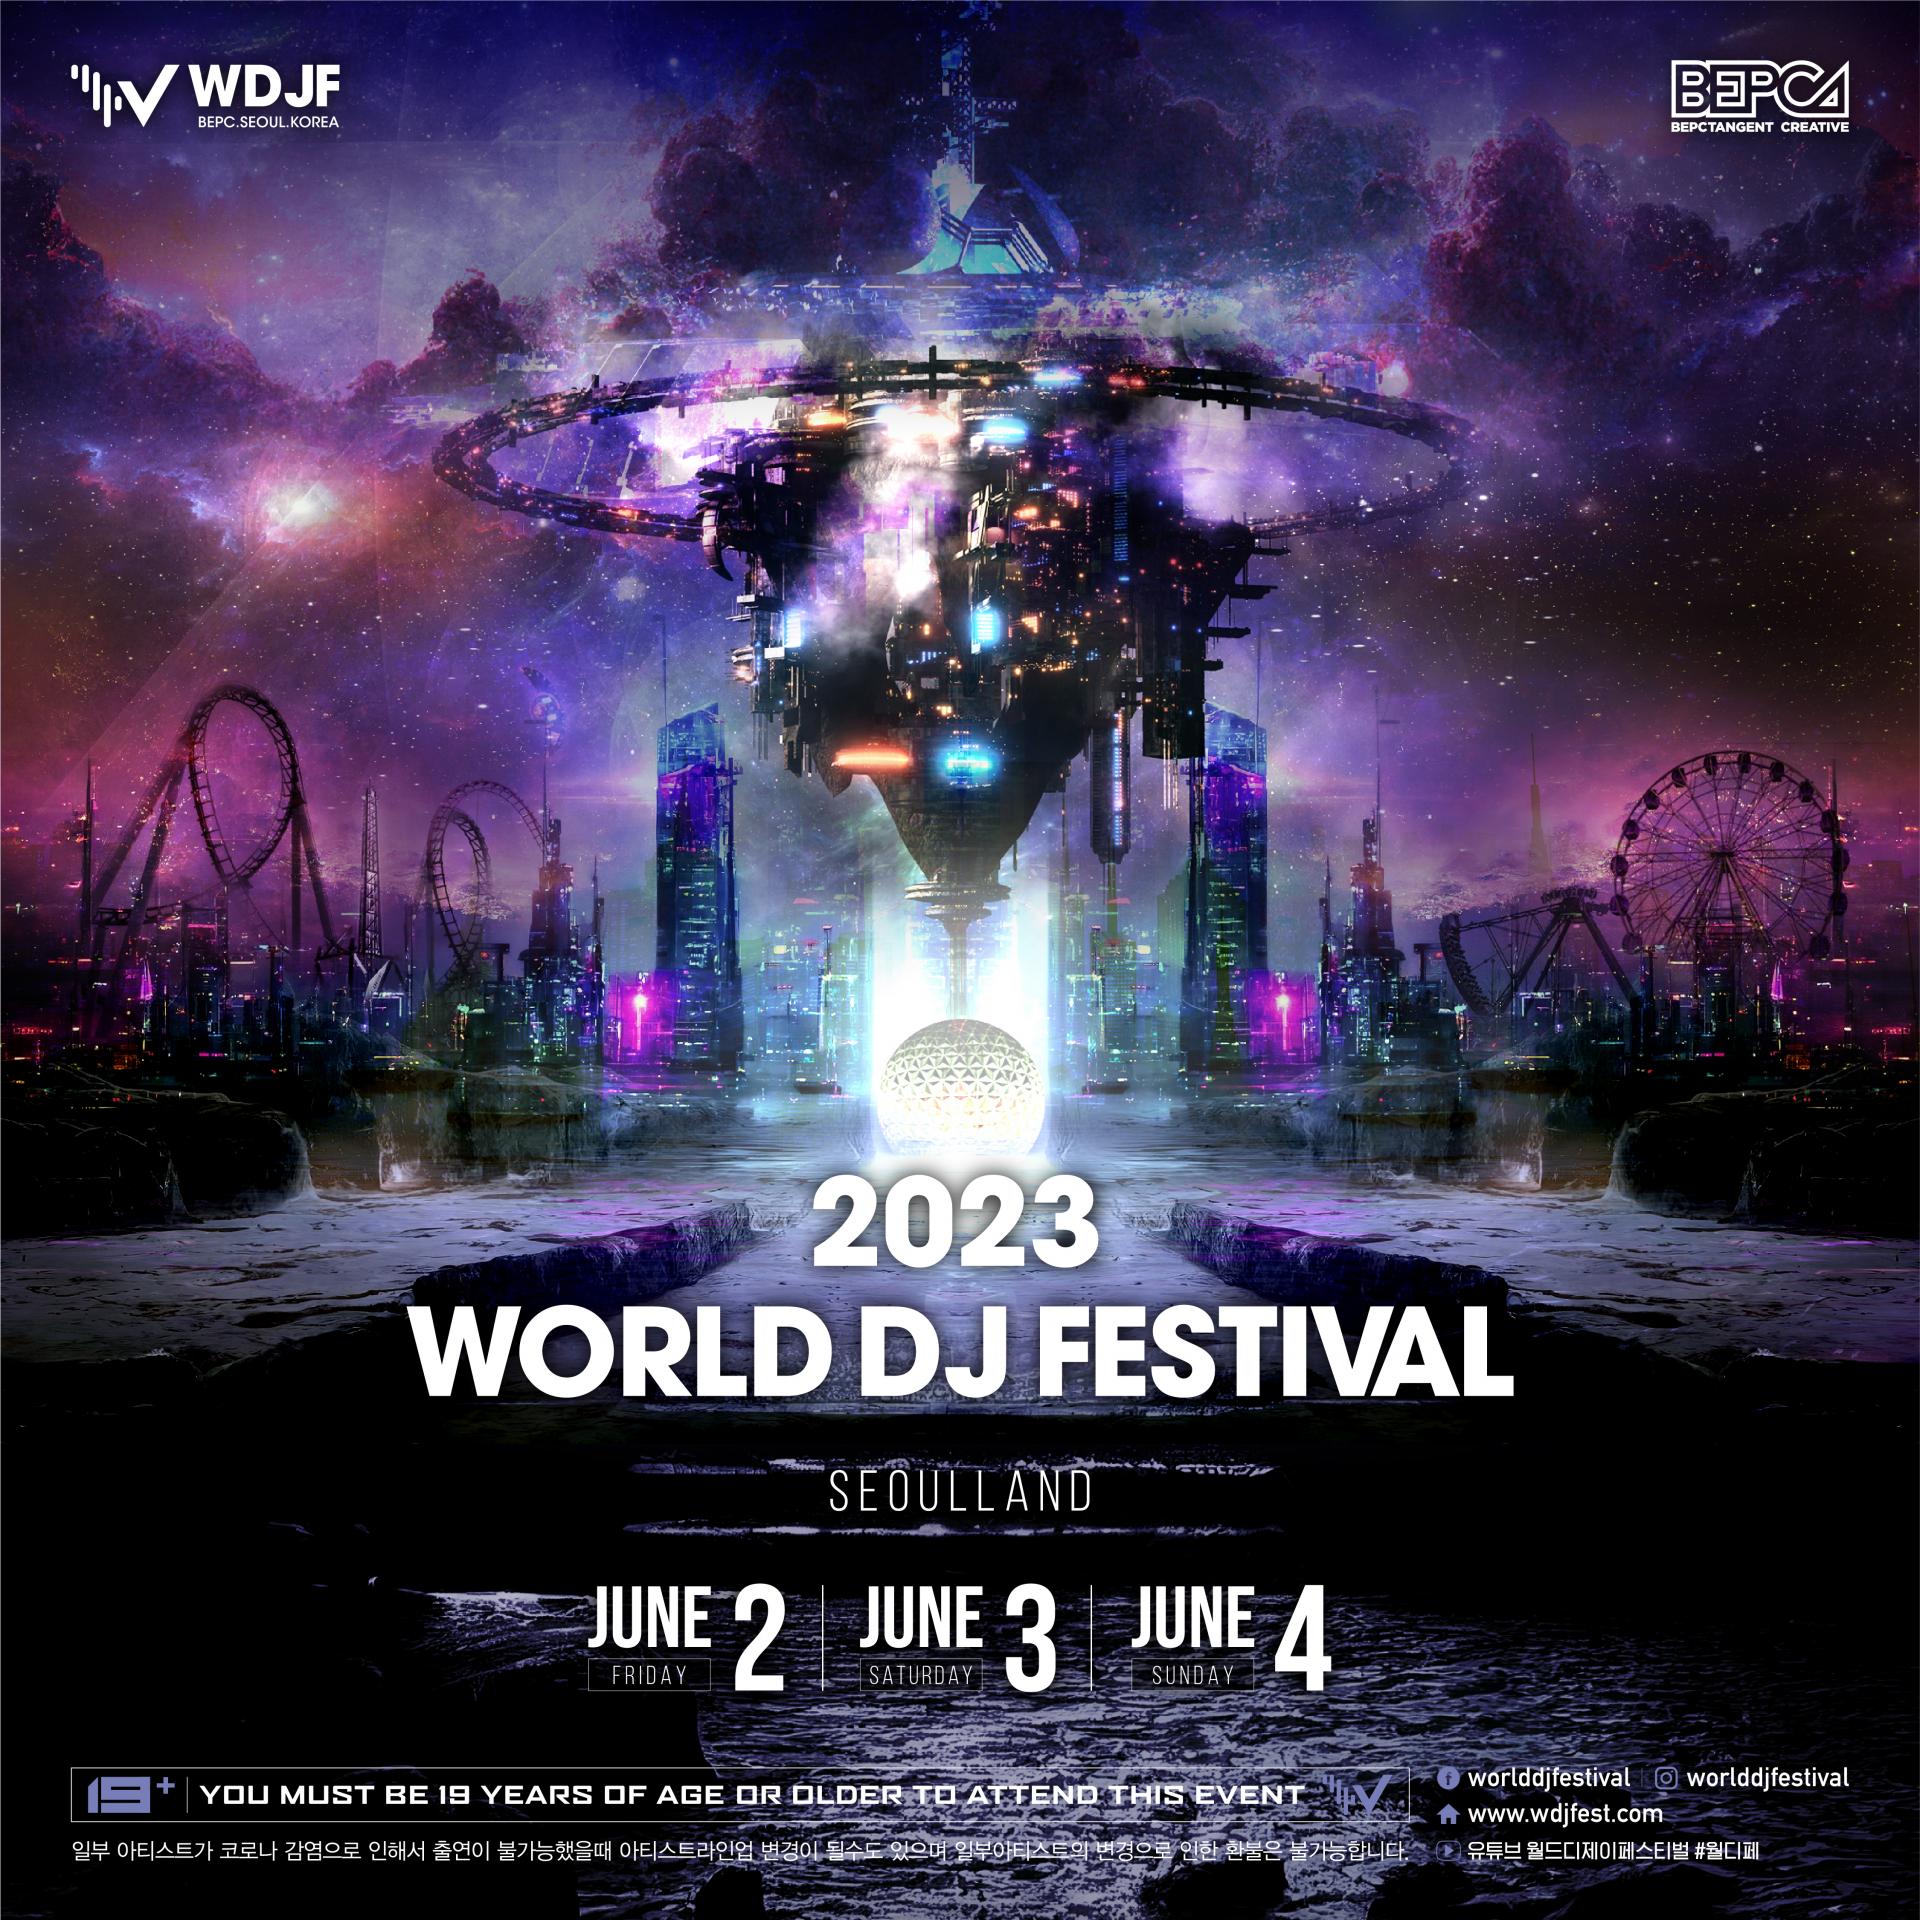 2023-World-DJ-Festival-Announcement